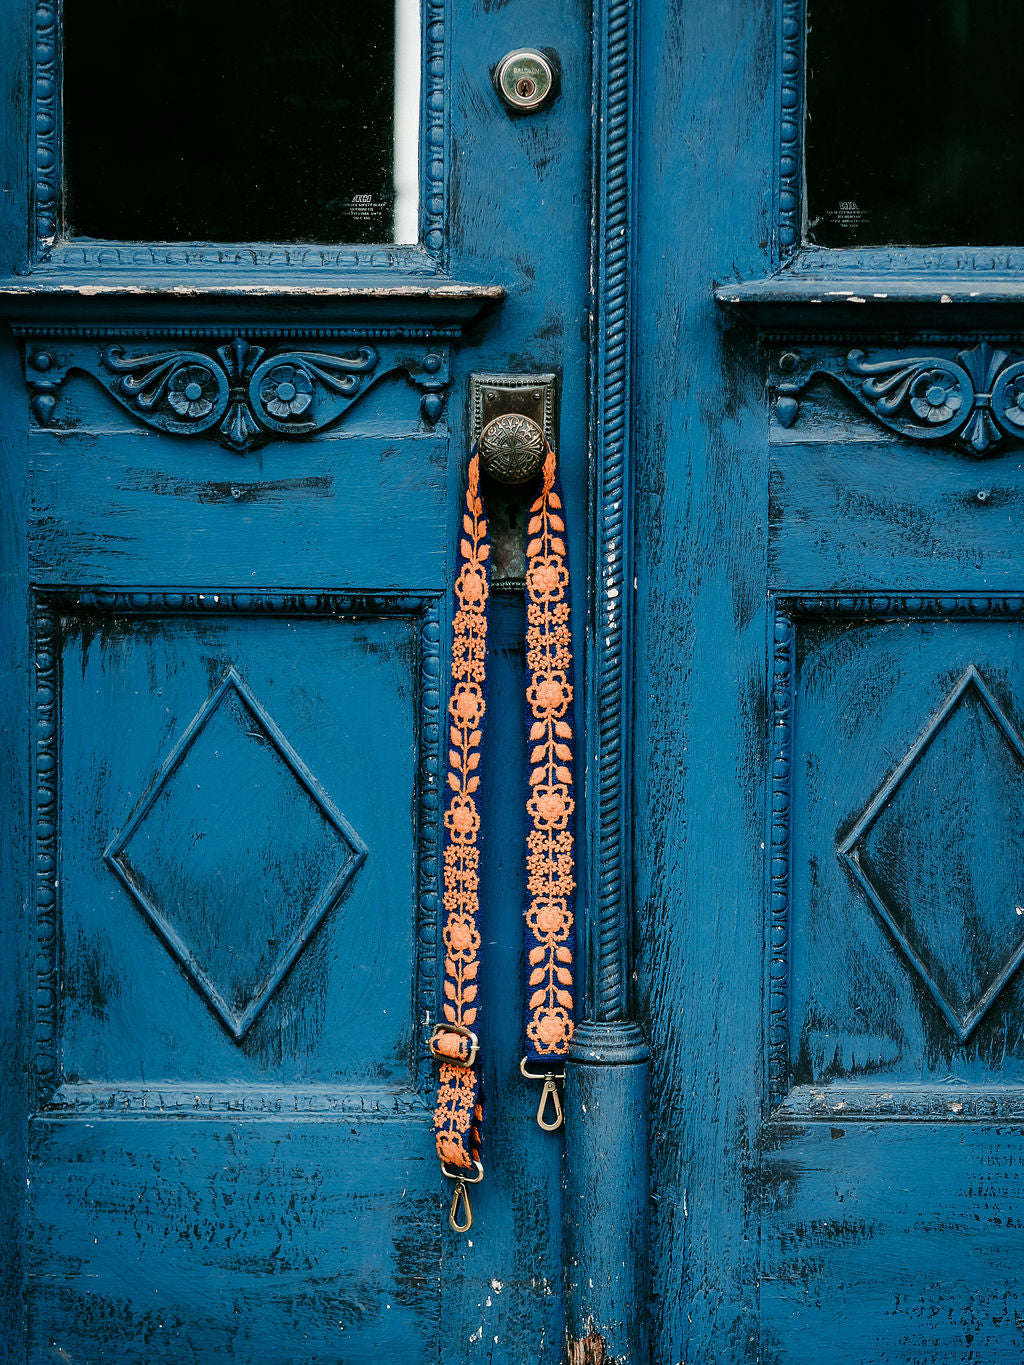 Kenley Adjustable Strap displayed hanging on the doorknob or a blue door.